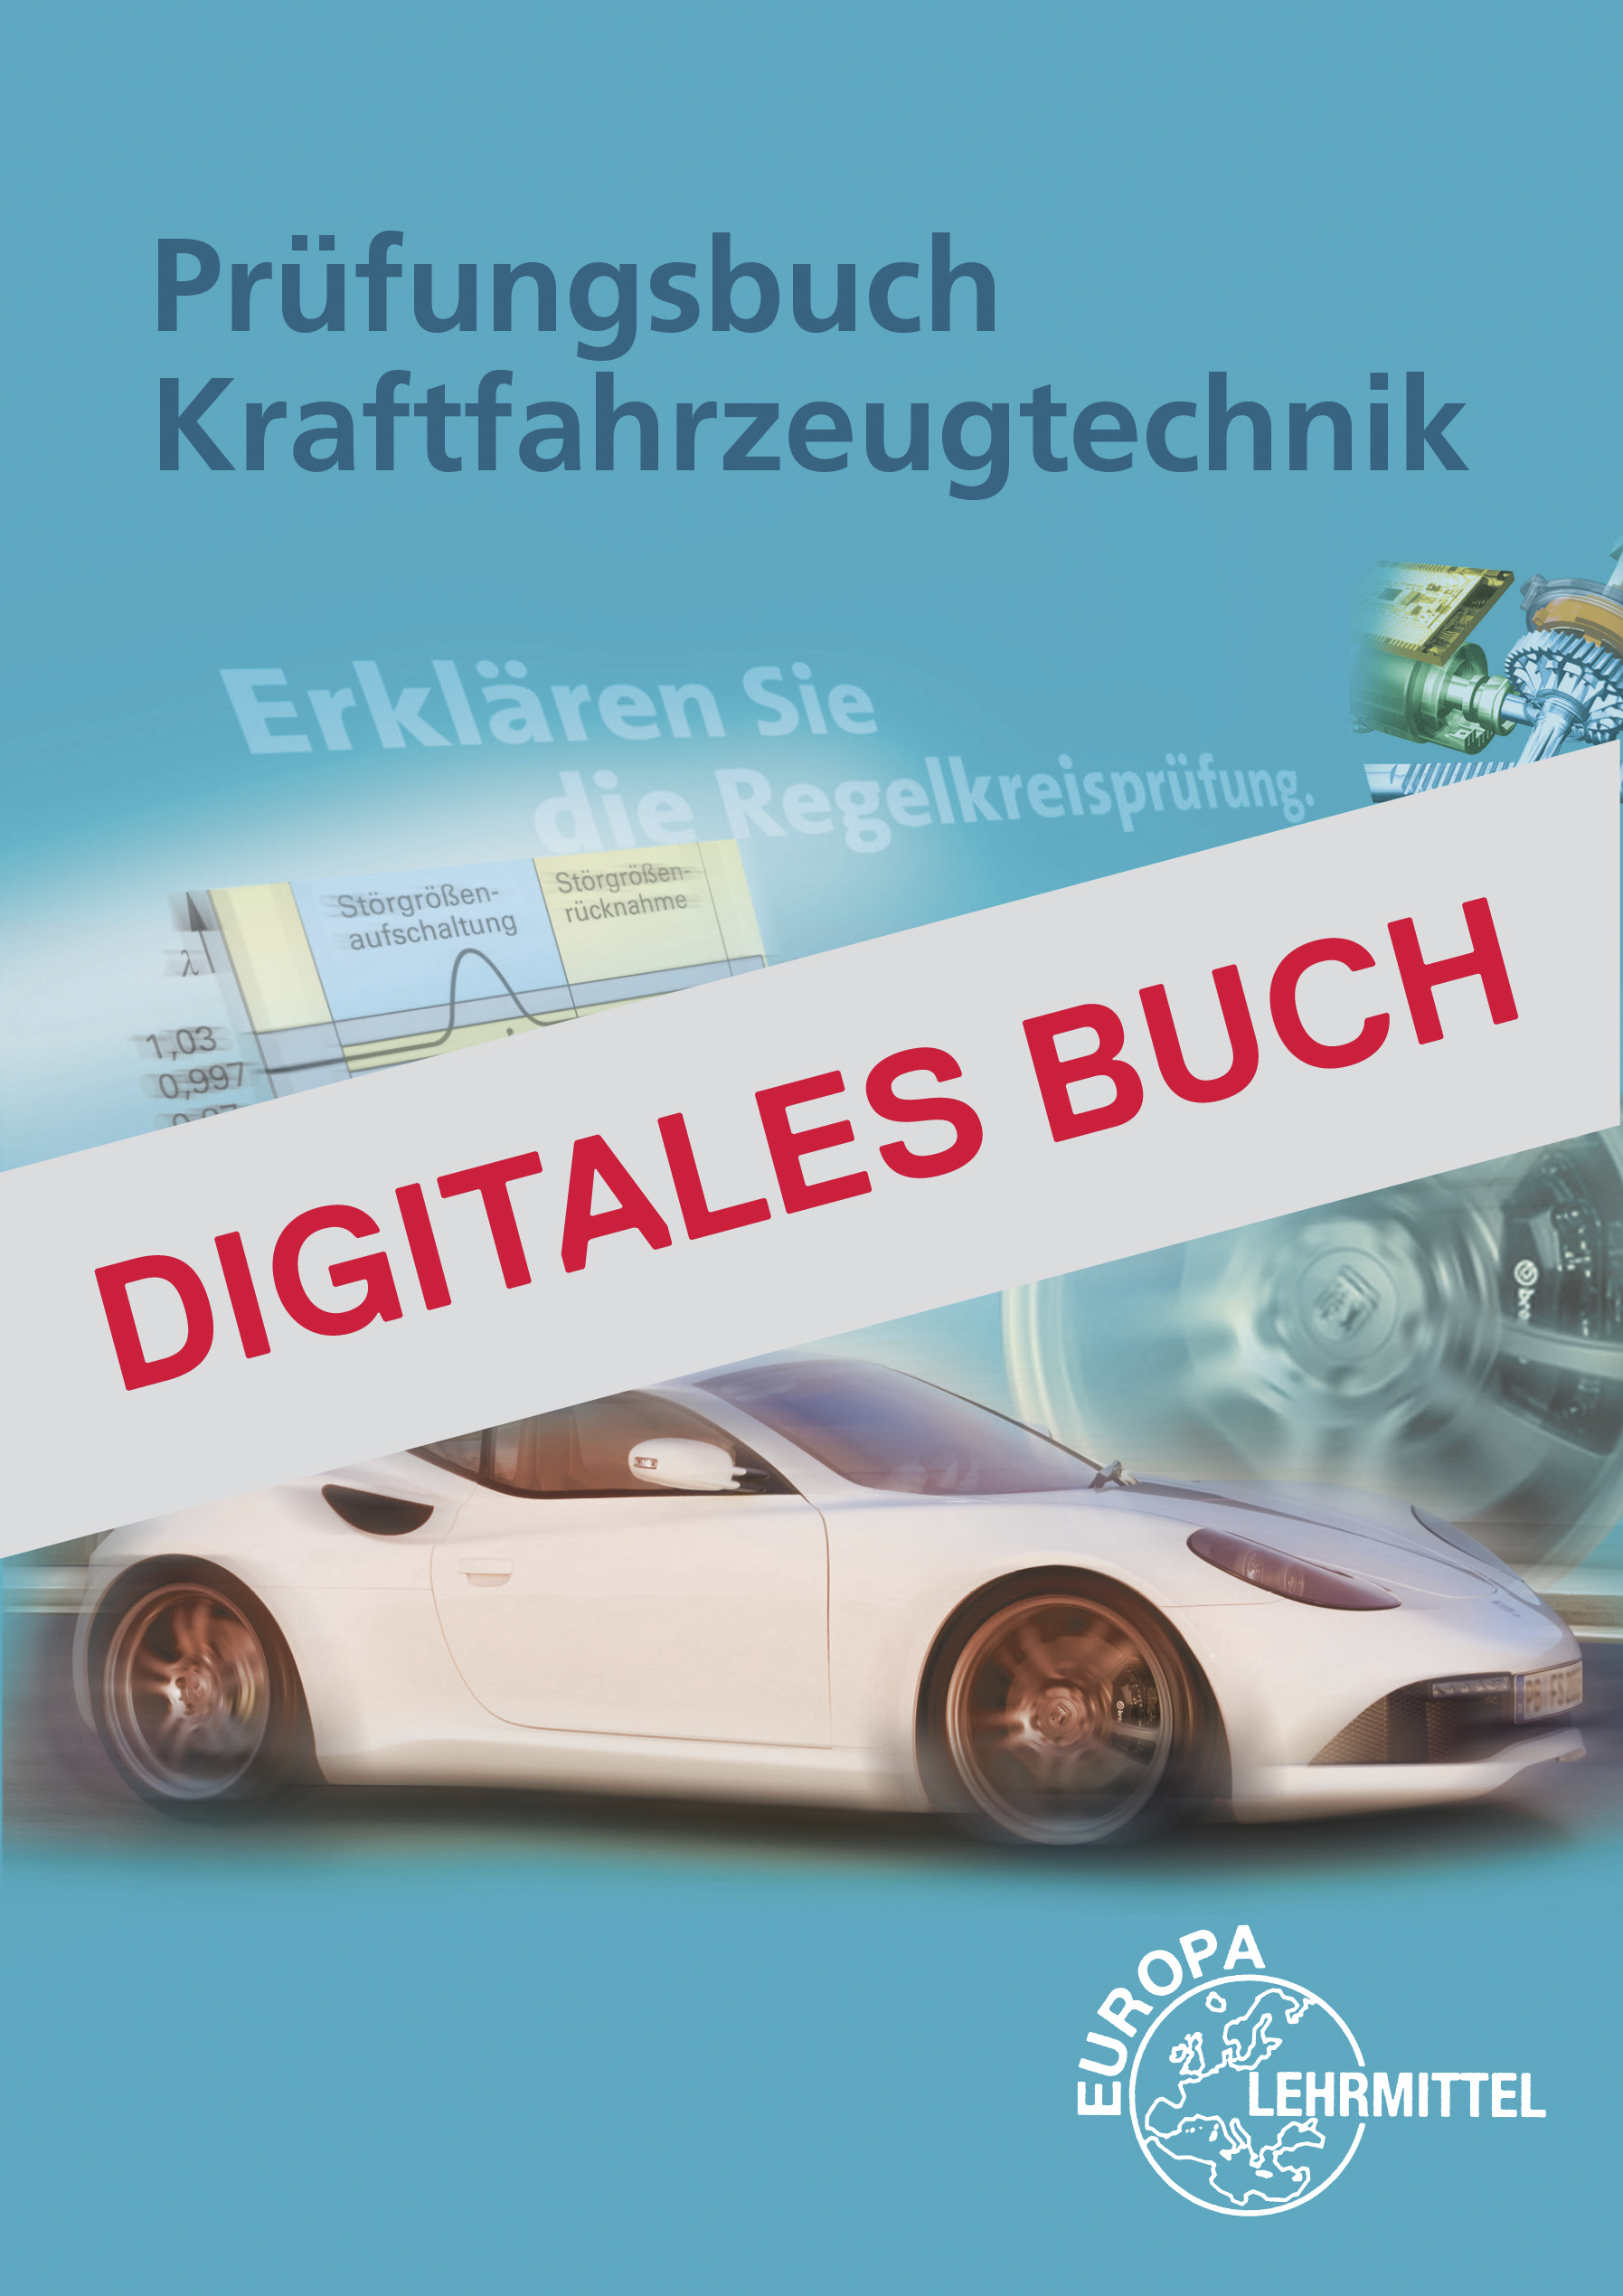 Prüfungsbuch Kraftfahrzeugtechnik - Digitales Buch